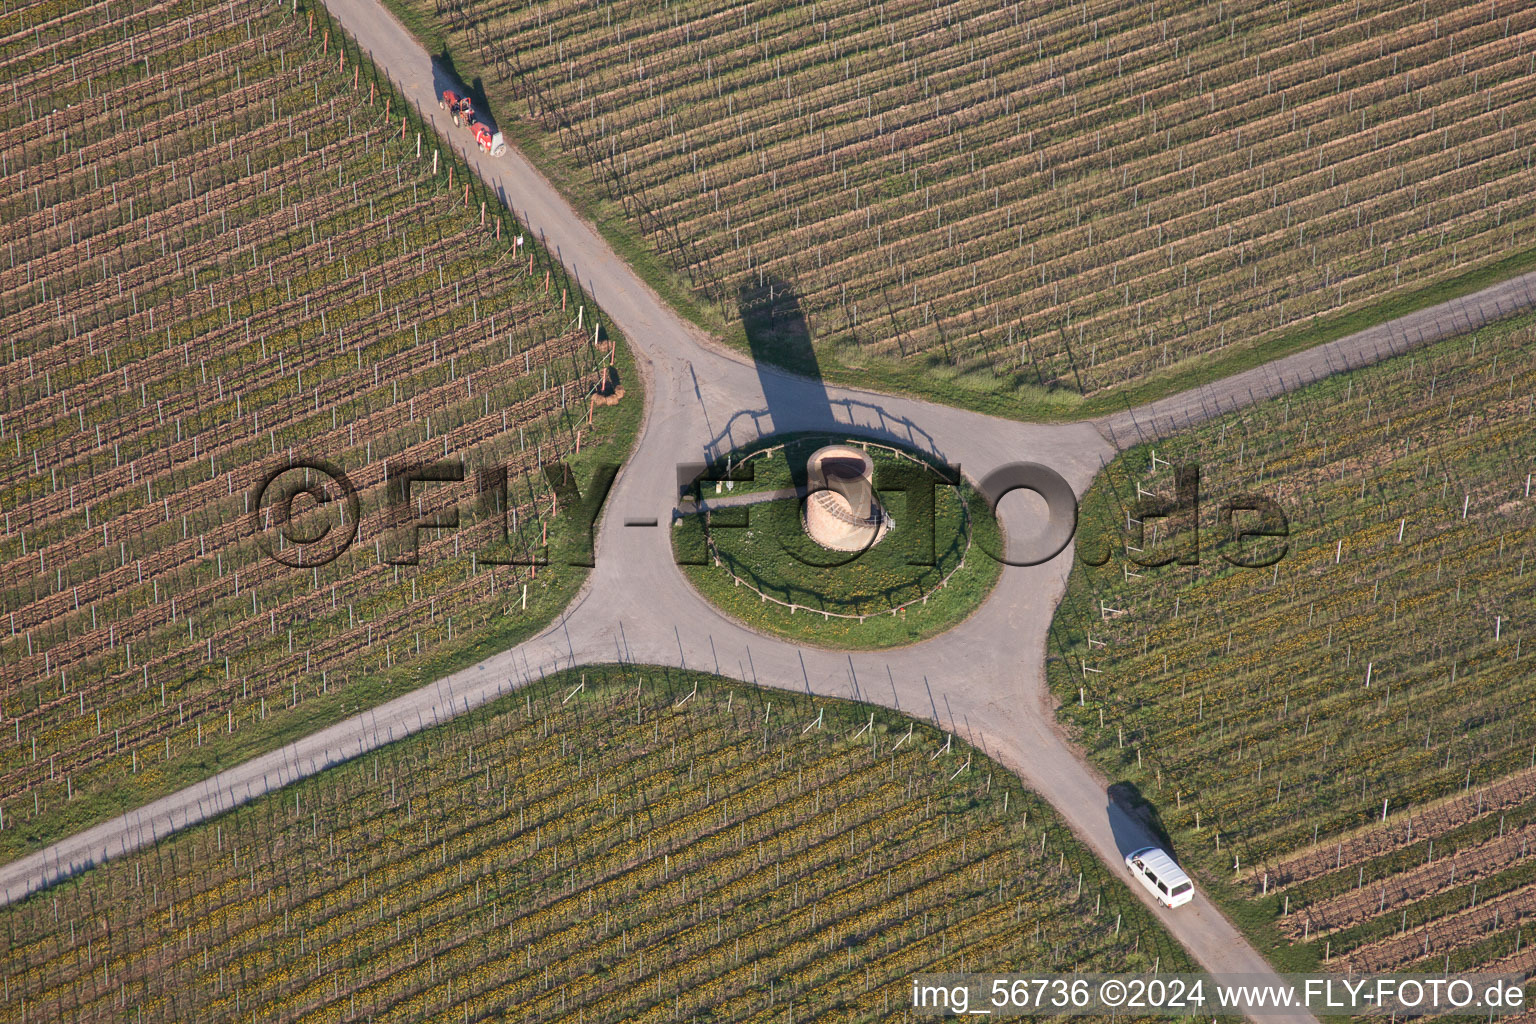 Fields of wine cultivation landscape in Hochstadt (Pfalz) in the state Rhineland-Palatinate